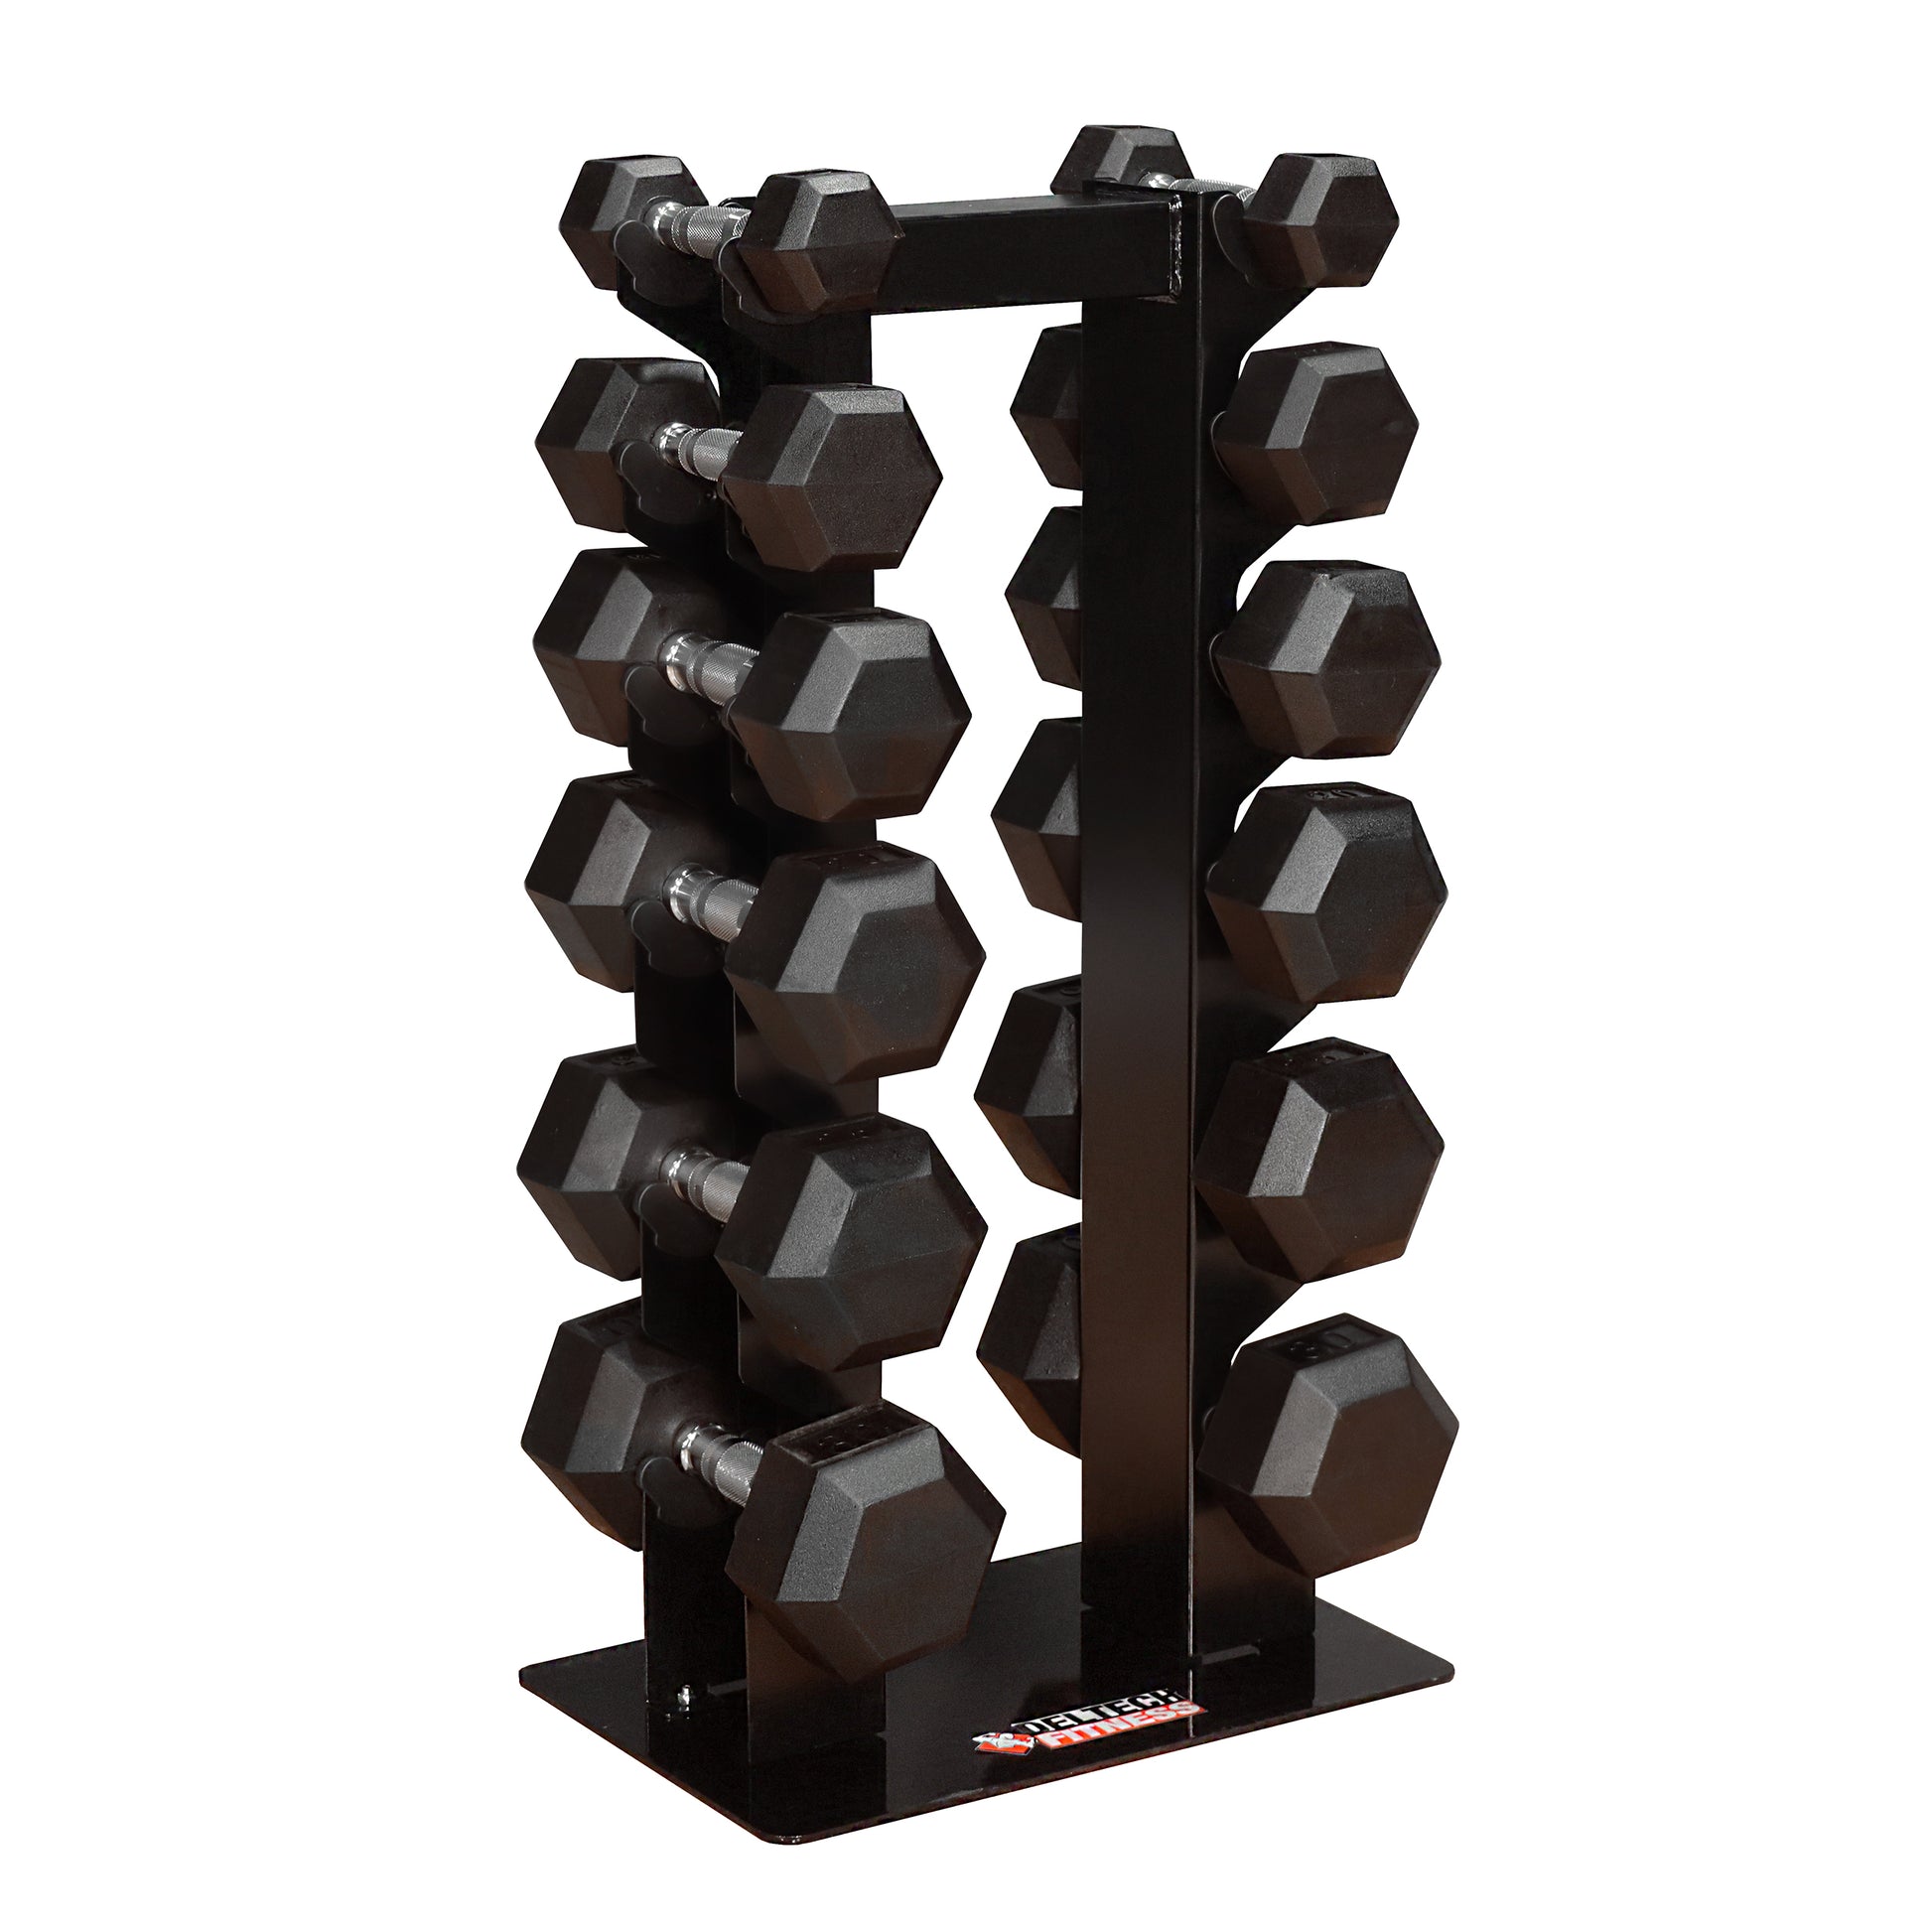 Vertical Dumbbell Rack with rubber dumbbells